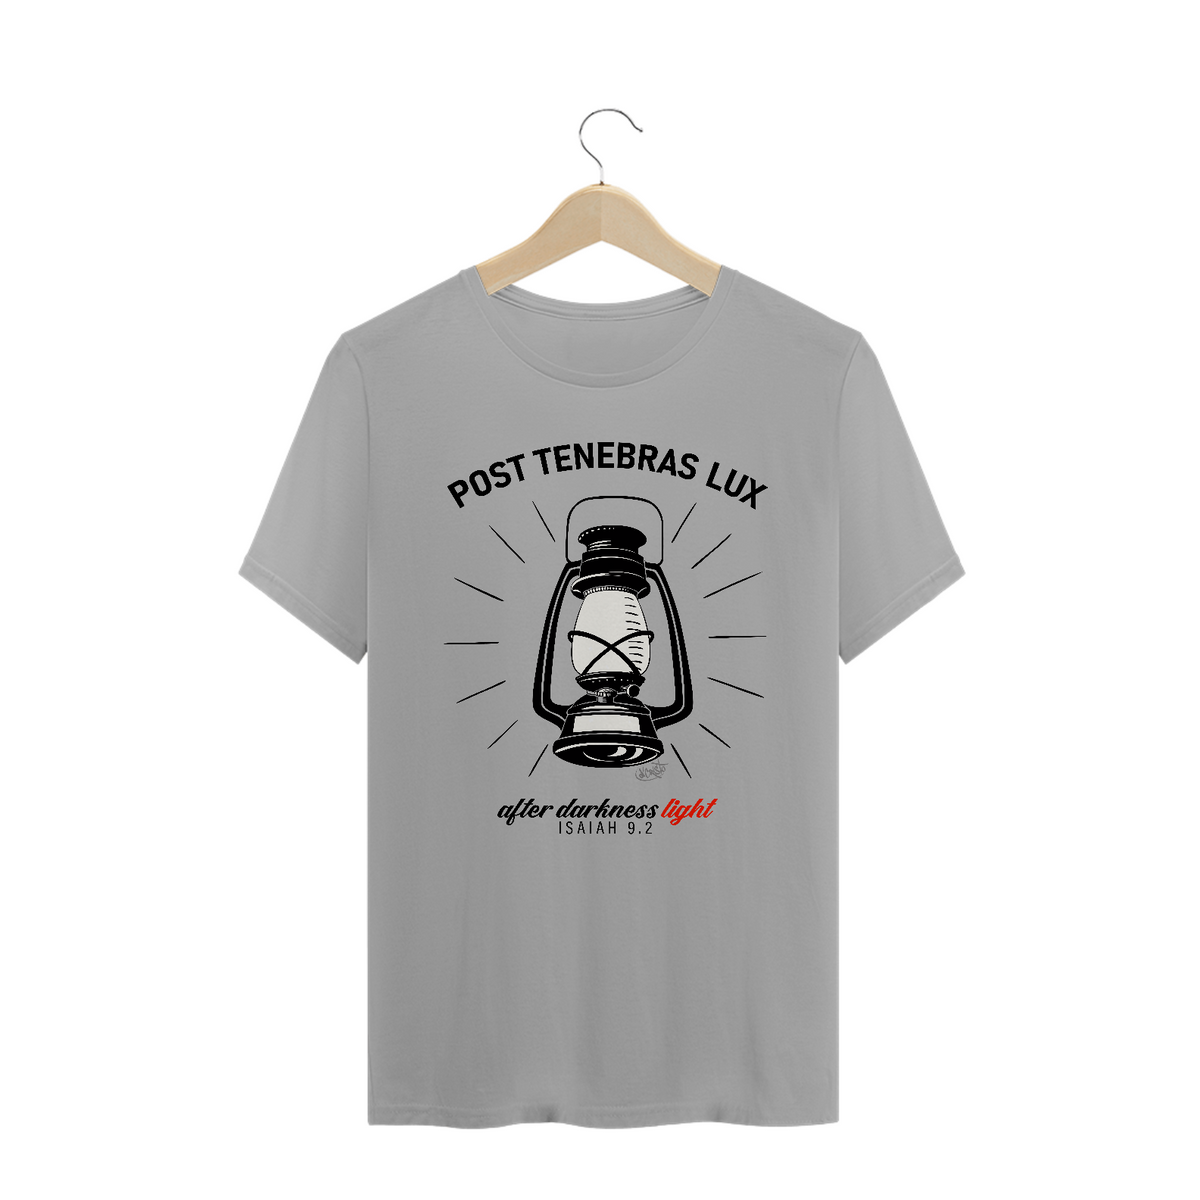 Nome do produto: Camiseta Post Tenebras Lux - cores claras